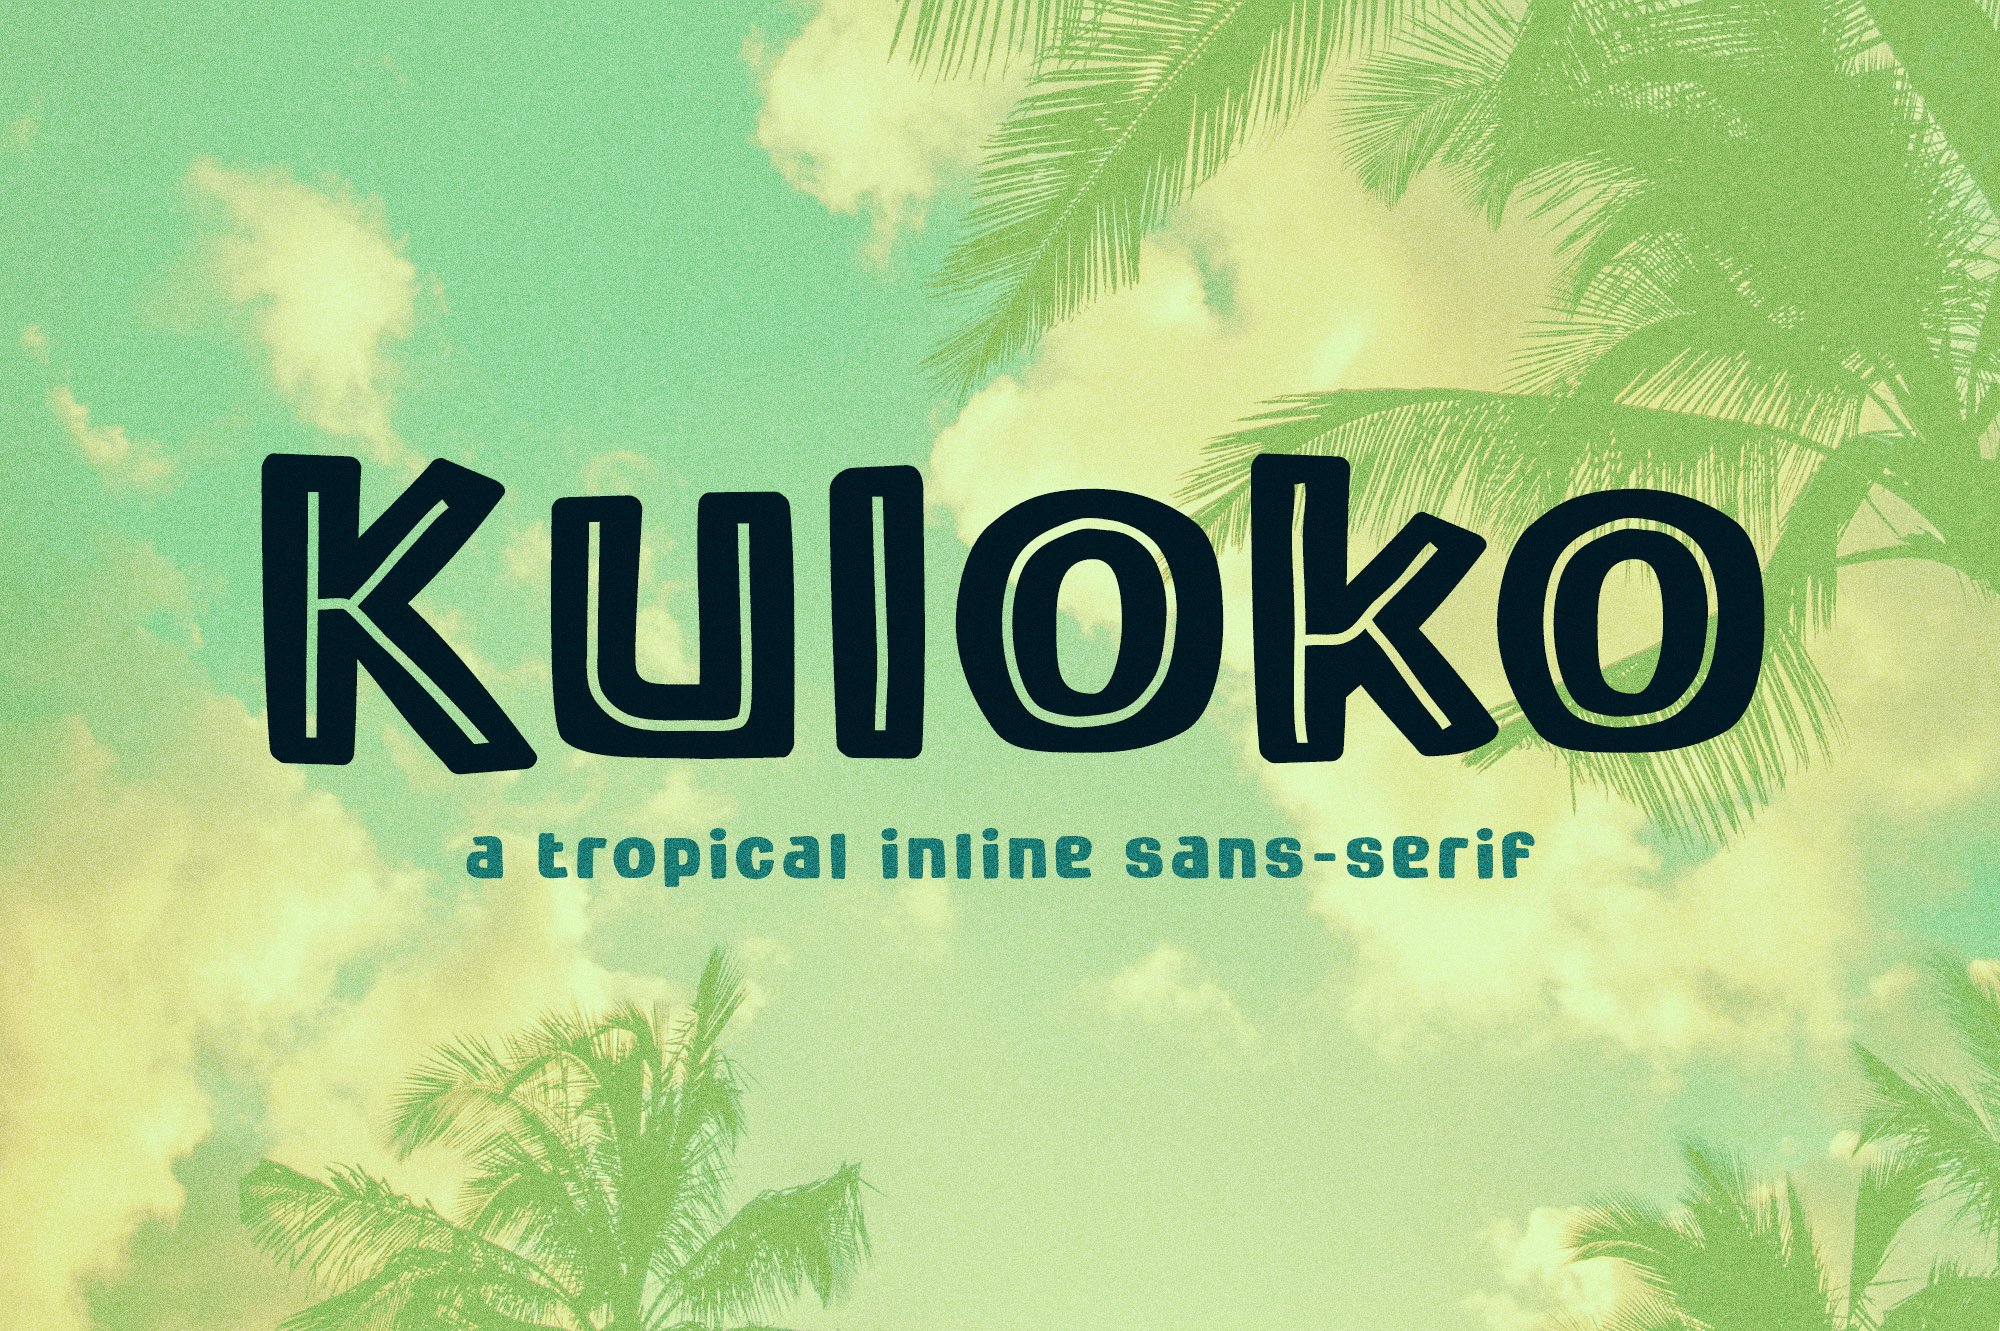 Kuloko Tropical Inline Sans Serif cover image.